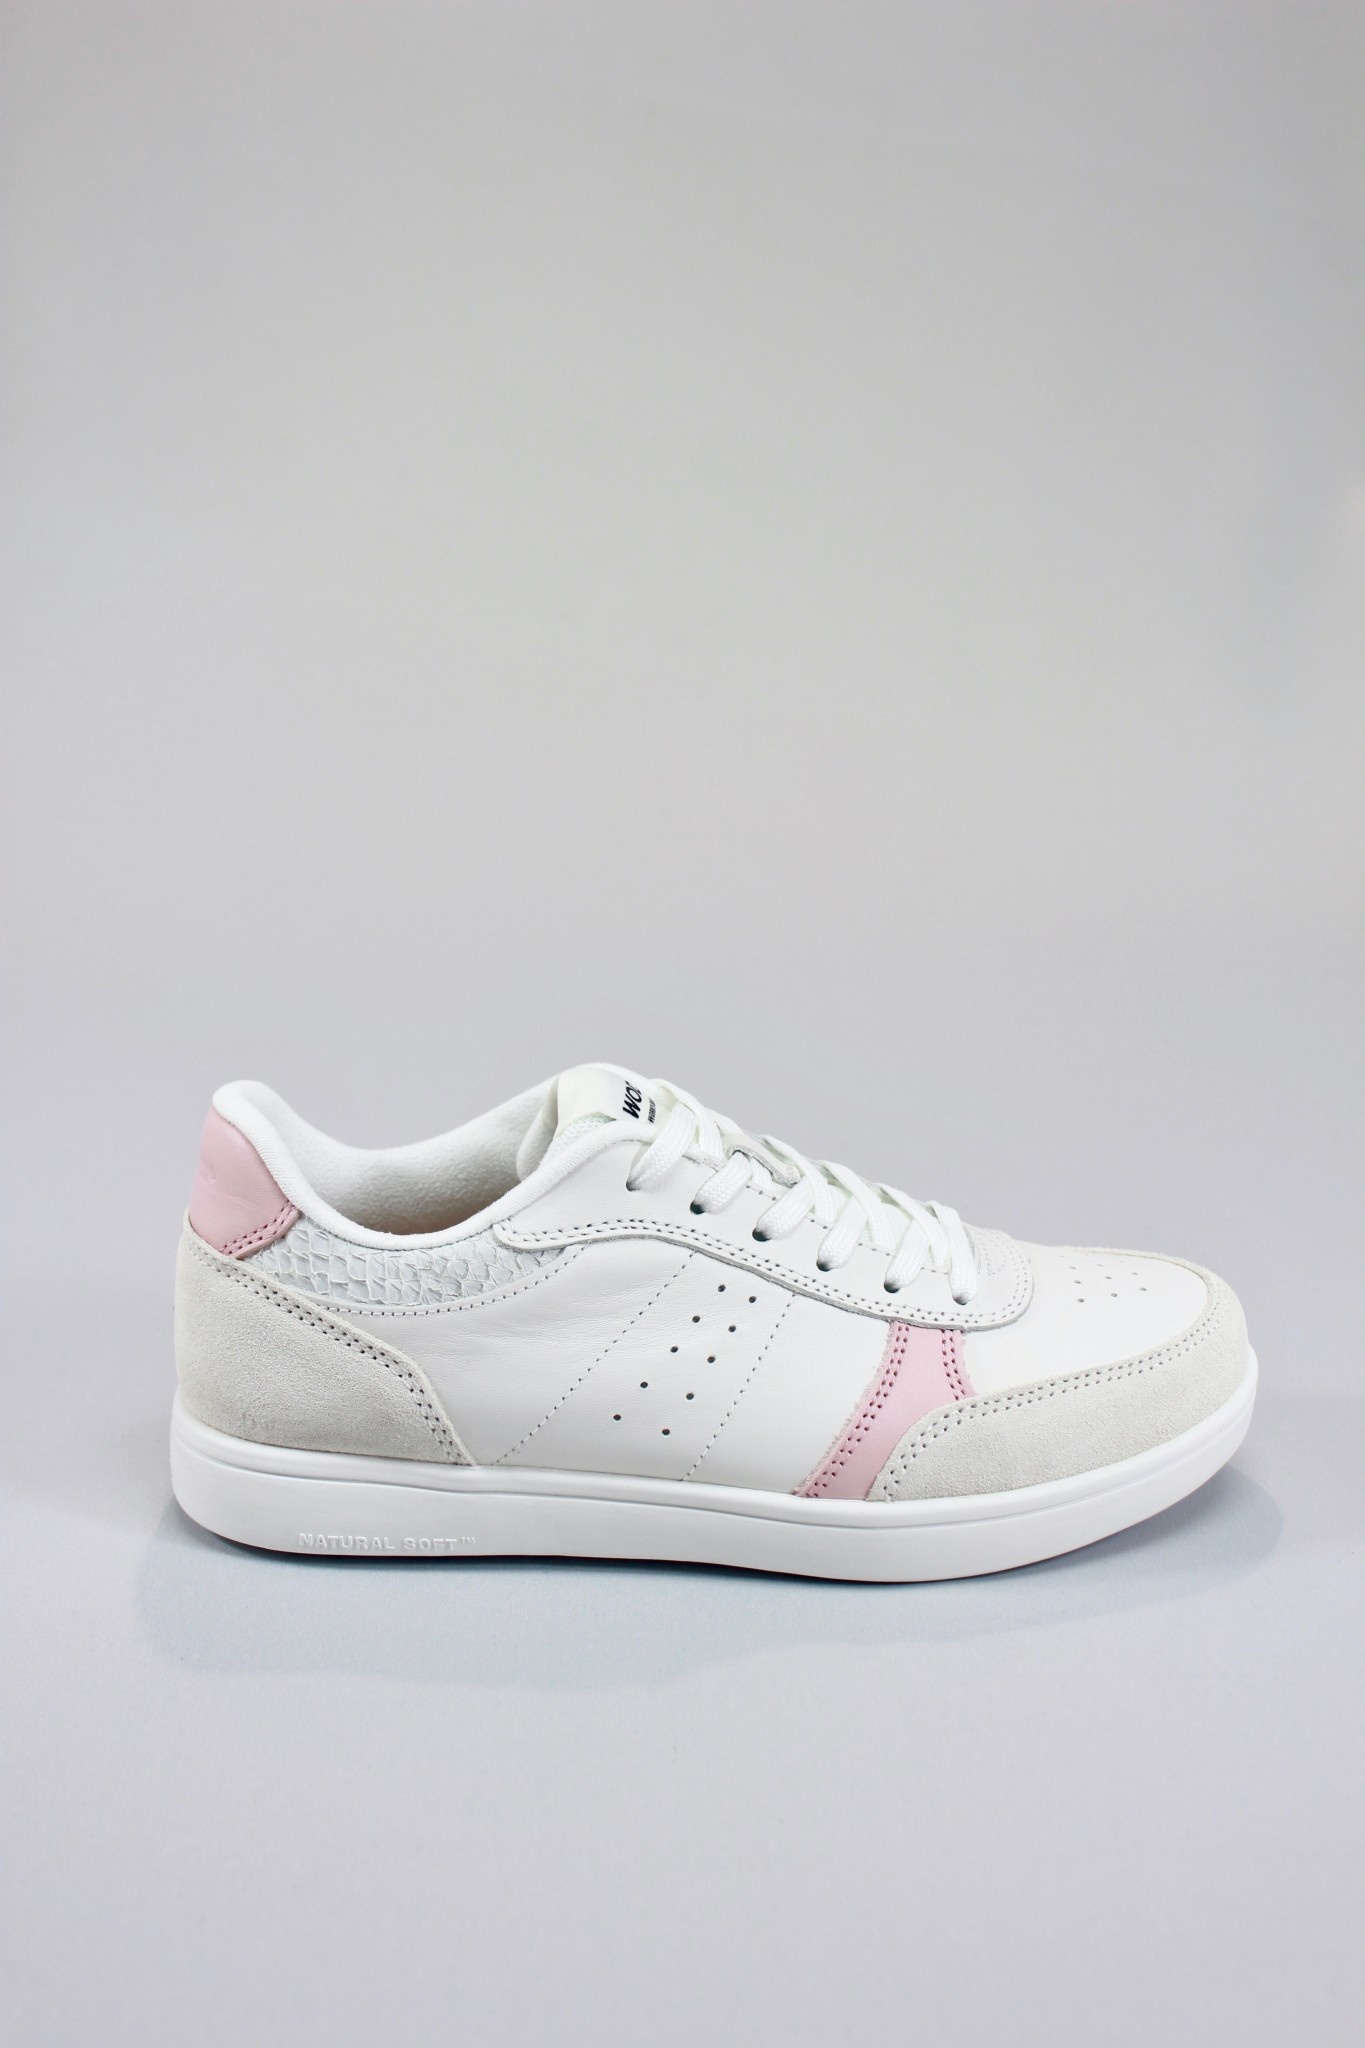 Woden - Bjork Sneaker - White / Pink